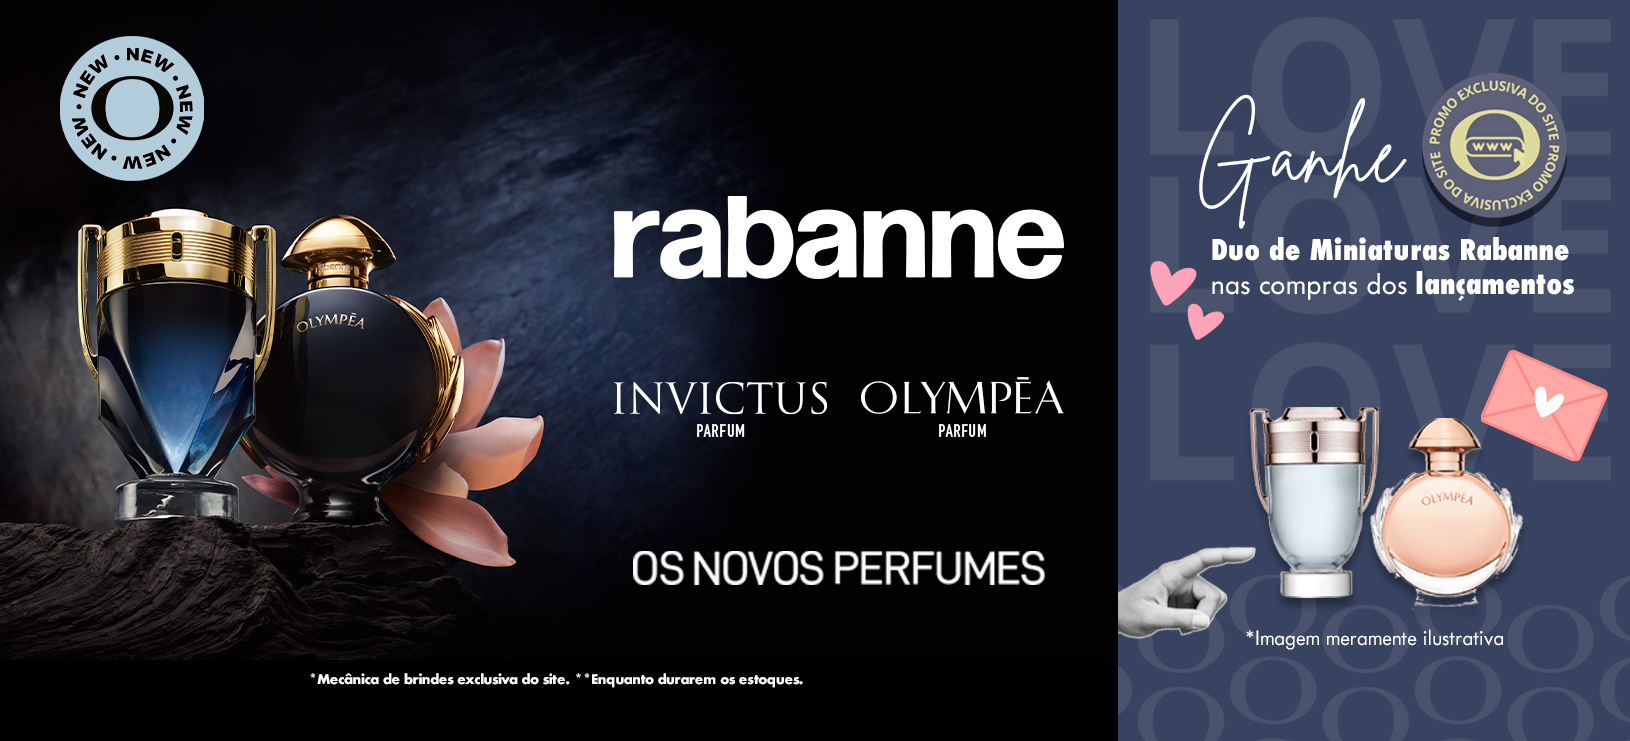 rabanne-invictus-parfum-olympea-parfum-banner-desktop